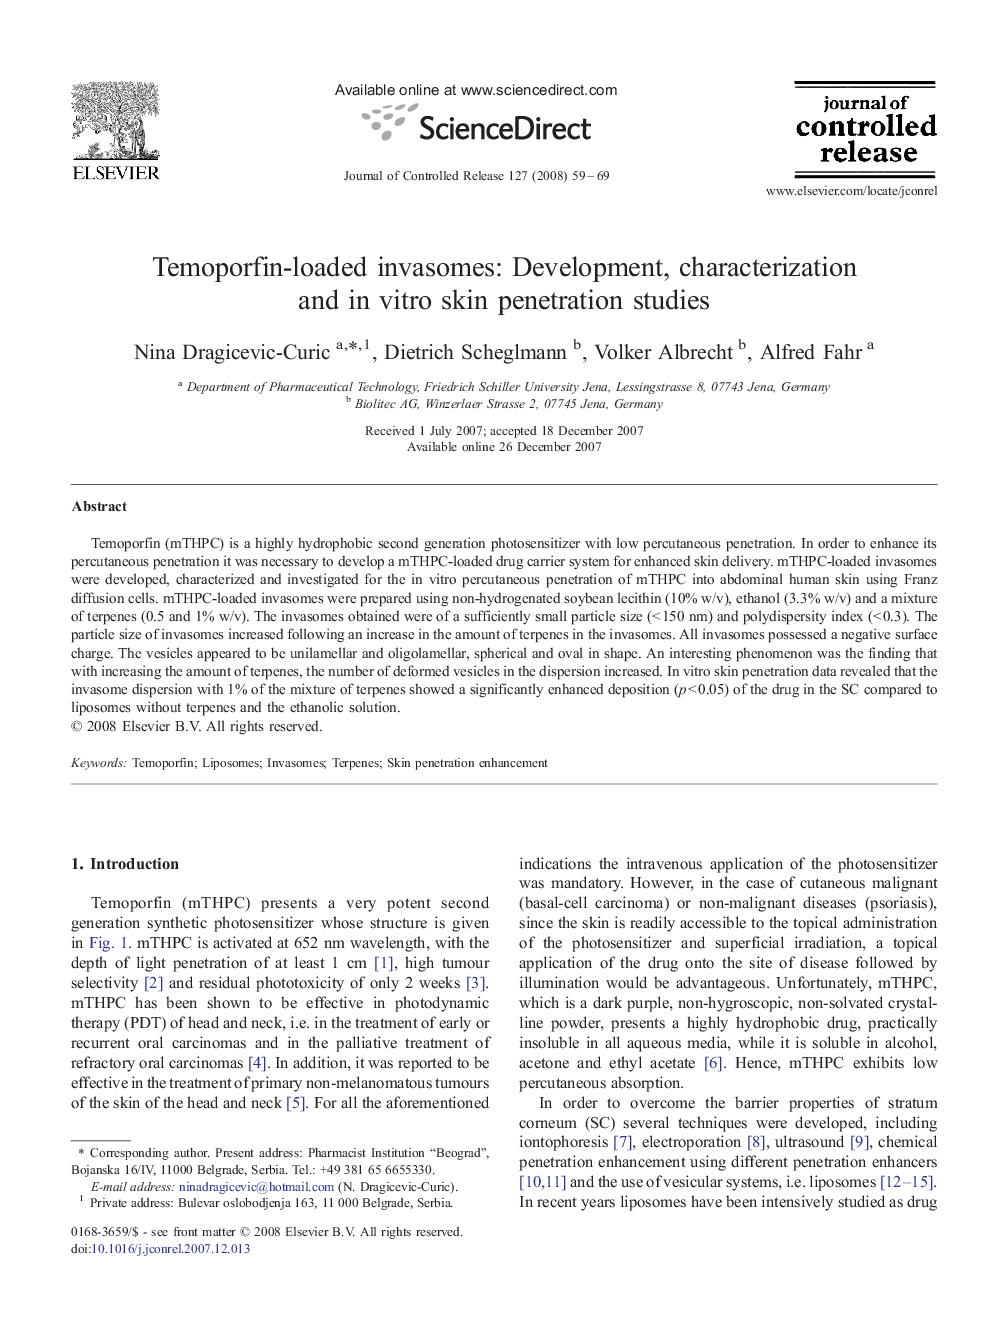 Temoporfin-loaded invasomes: Development, characterization and in vitro skin penetration studies